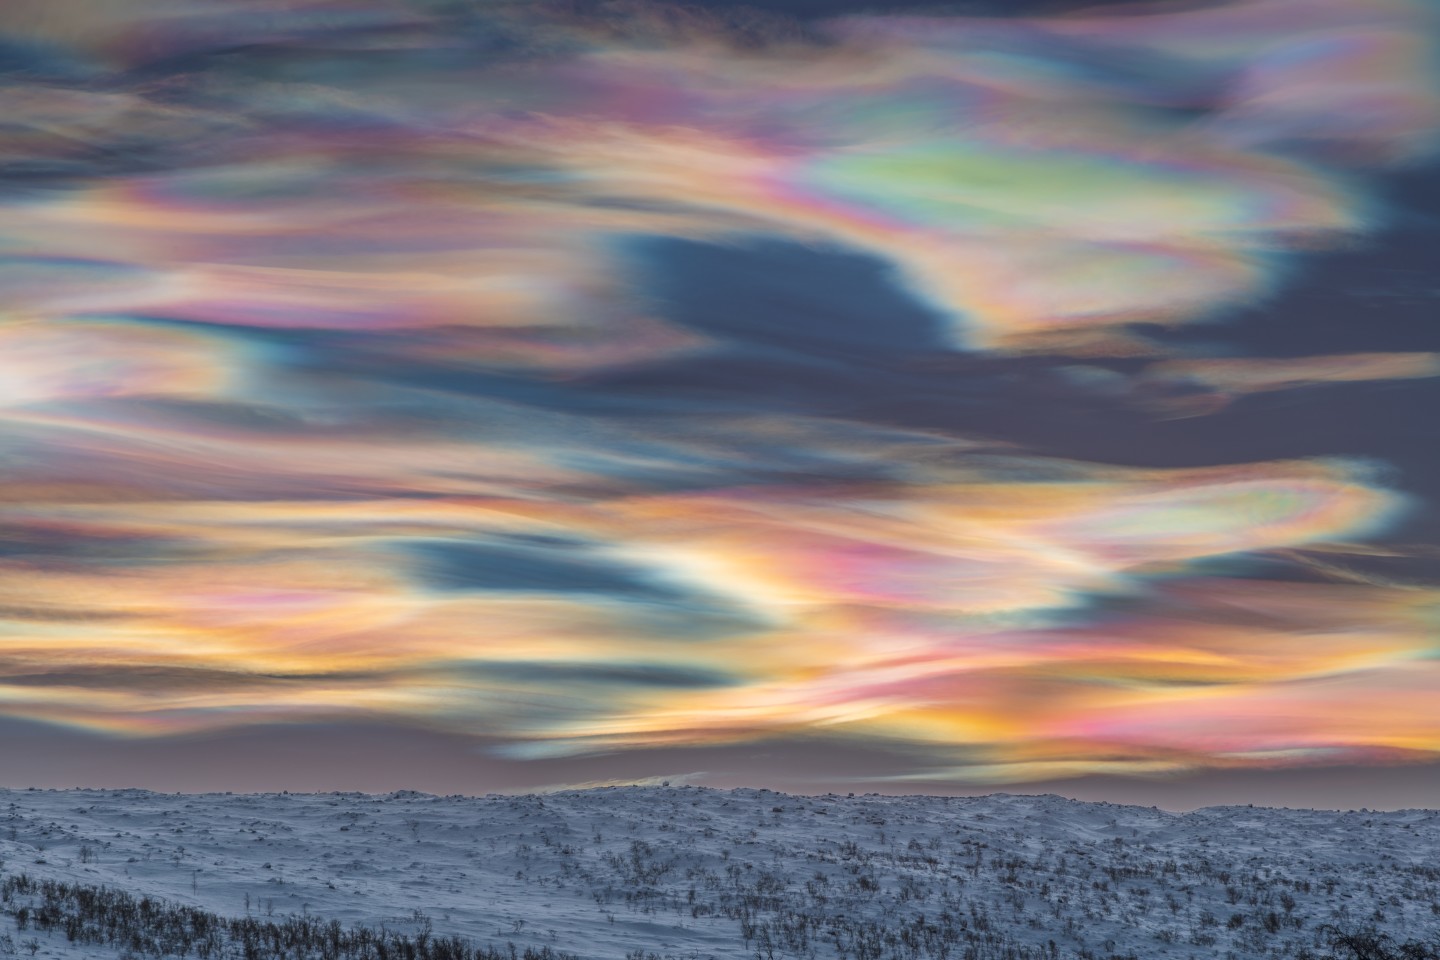 "Раскраска неба". Финская Лапландия. Фото: Thomas Kast